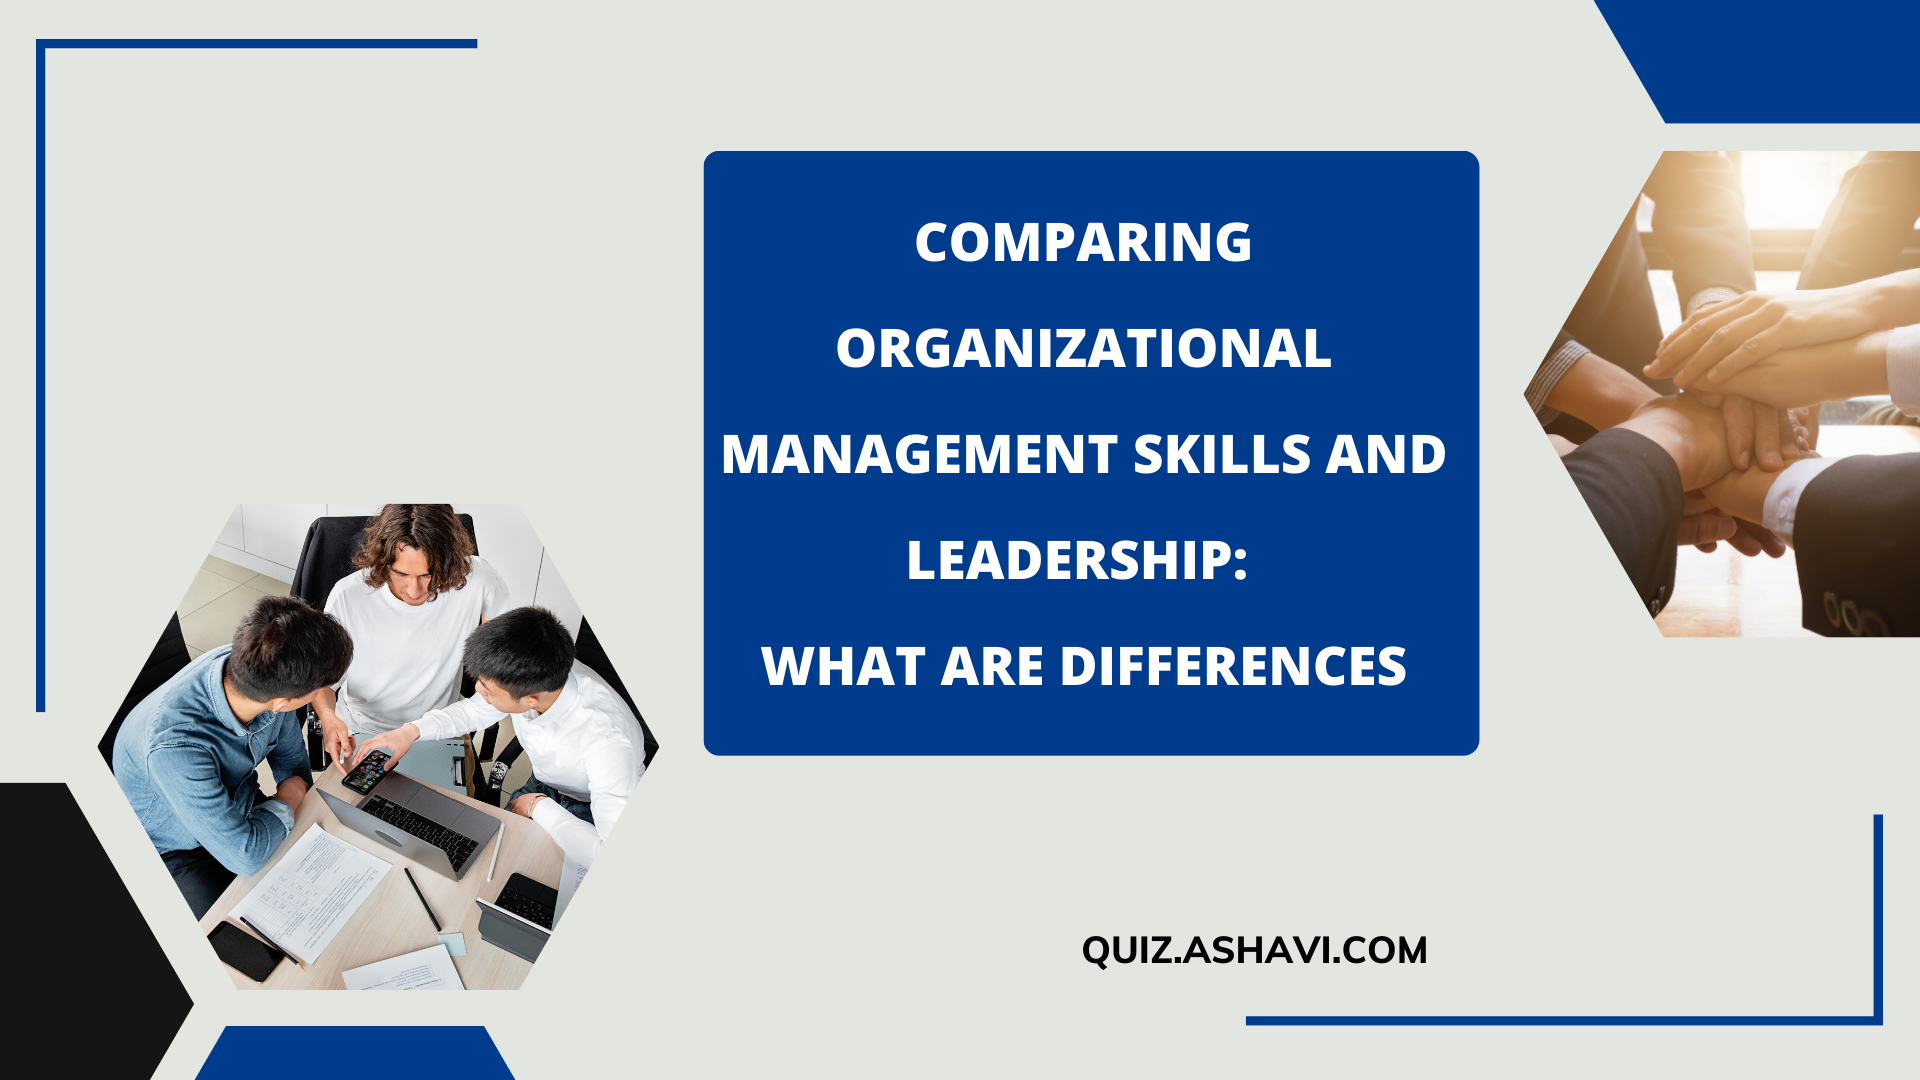 The understanding of Organizational Management Skills and Leadership Skills